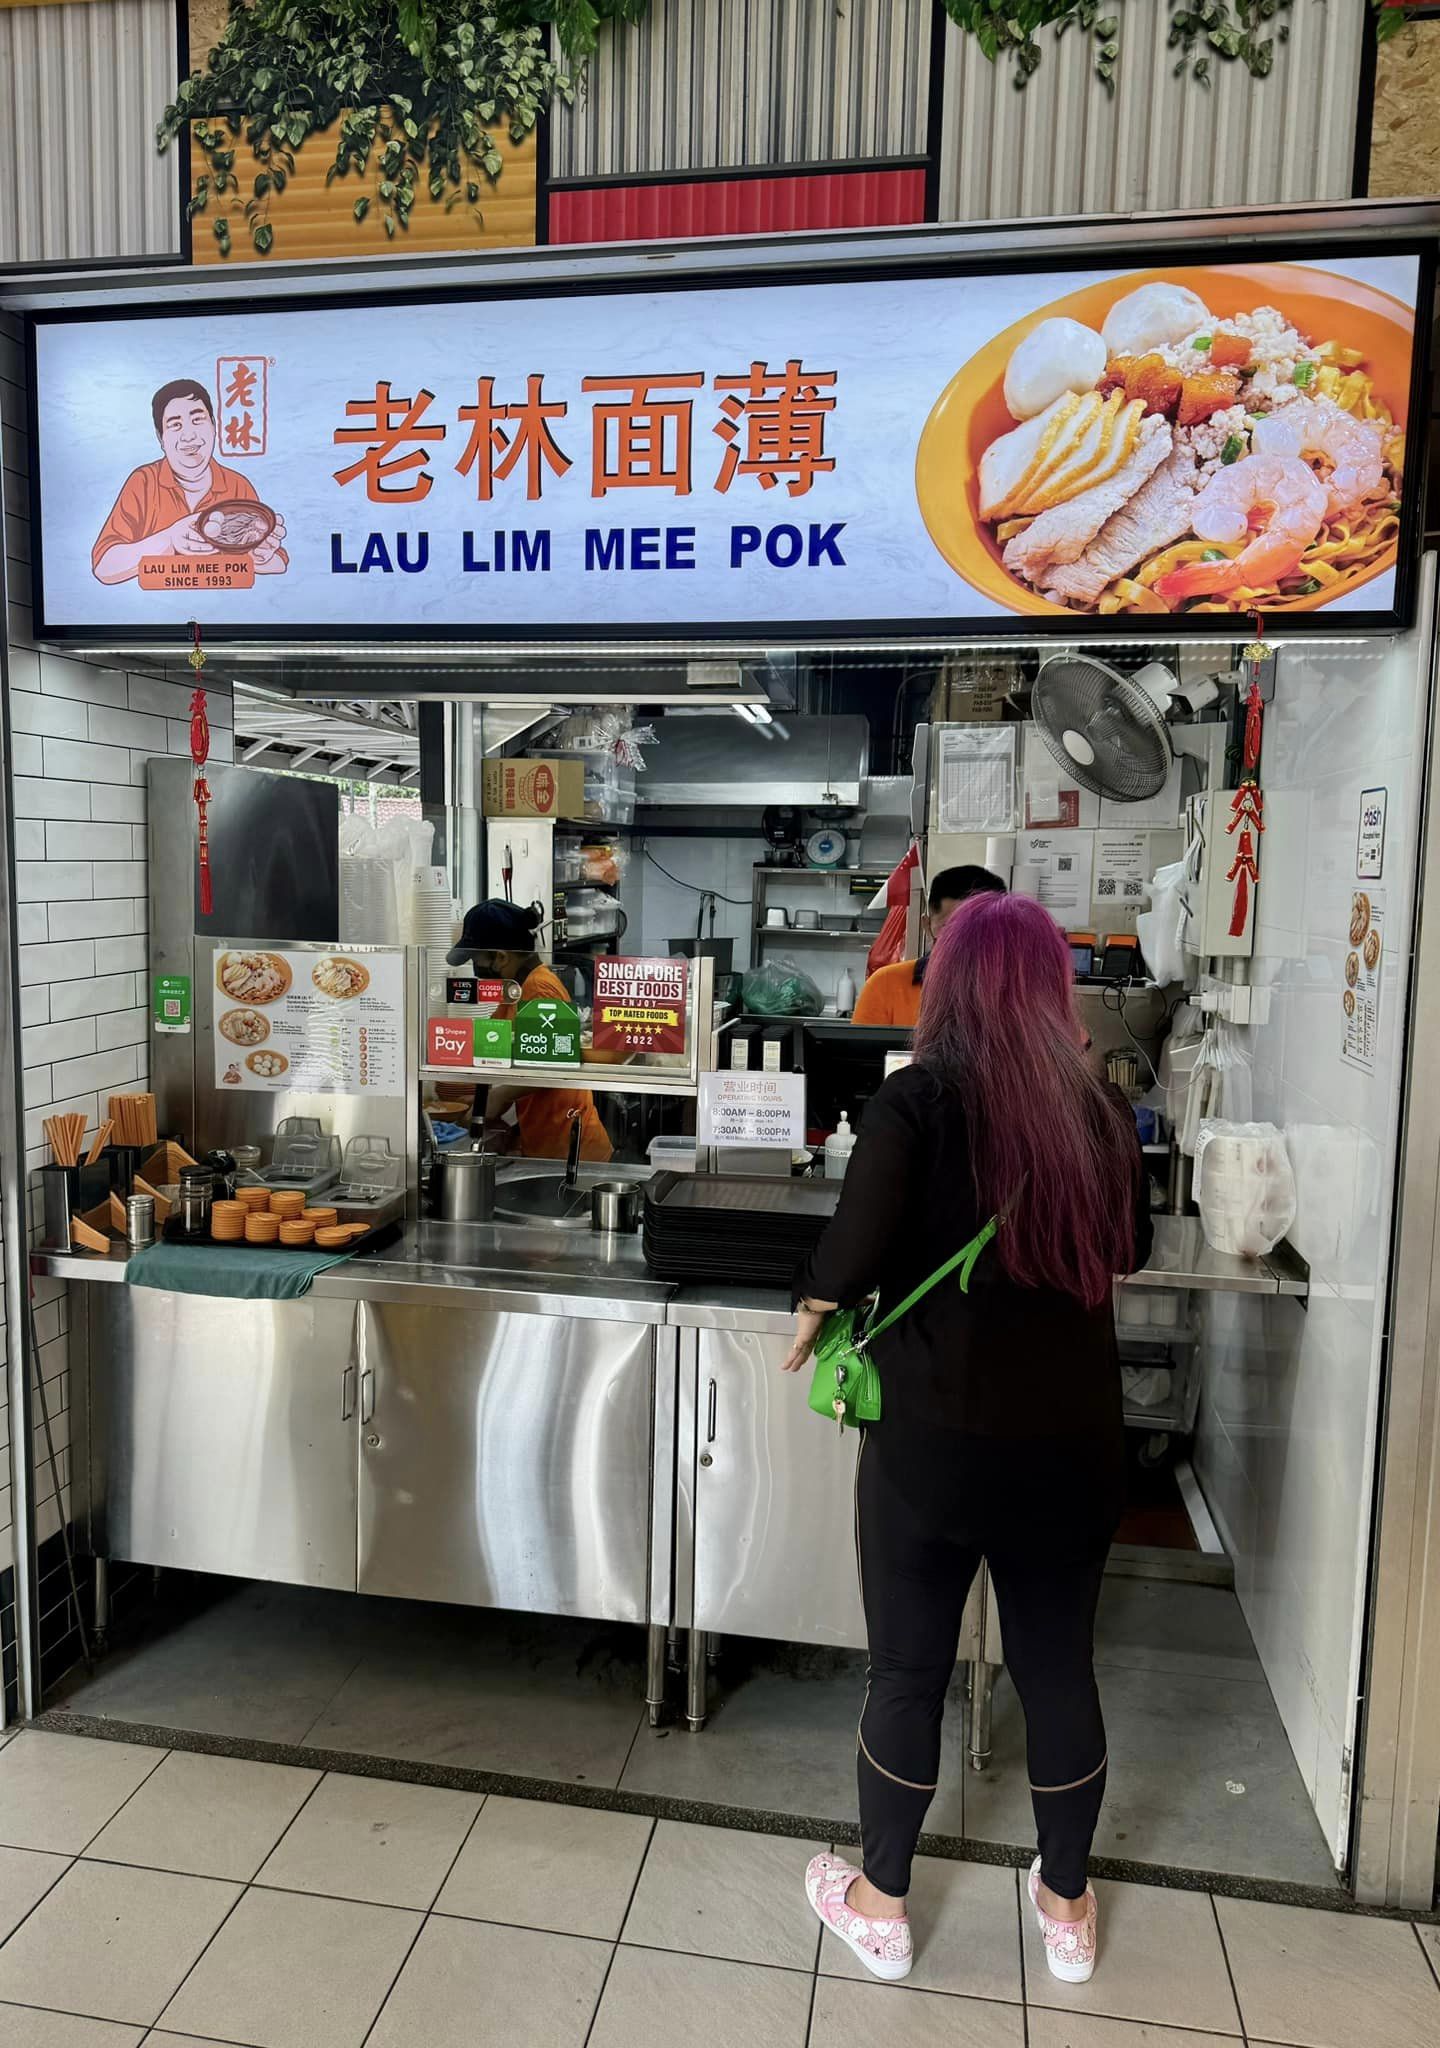 Lau Lim Mee Pok